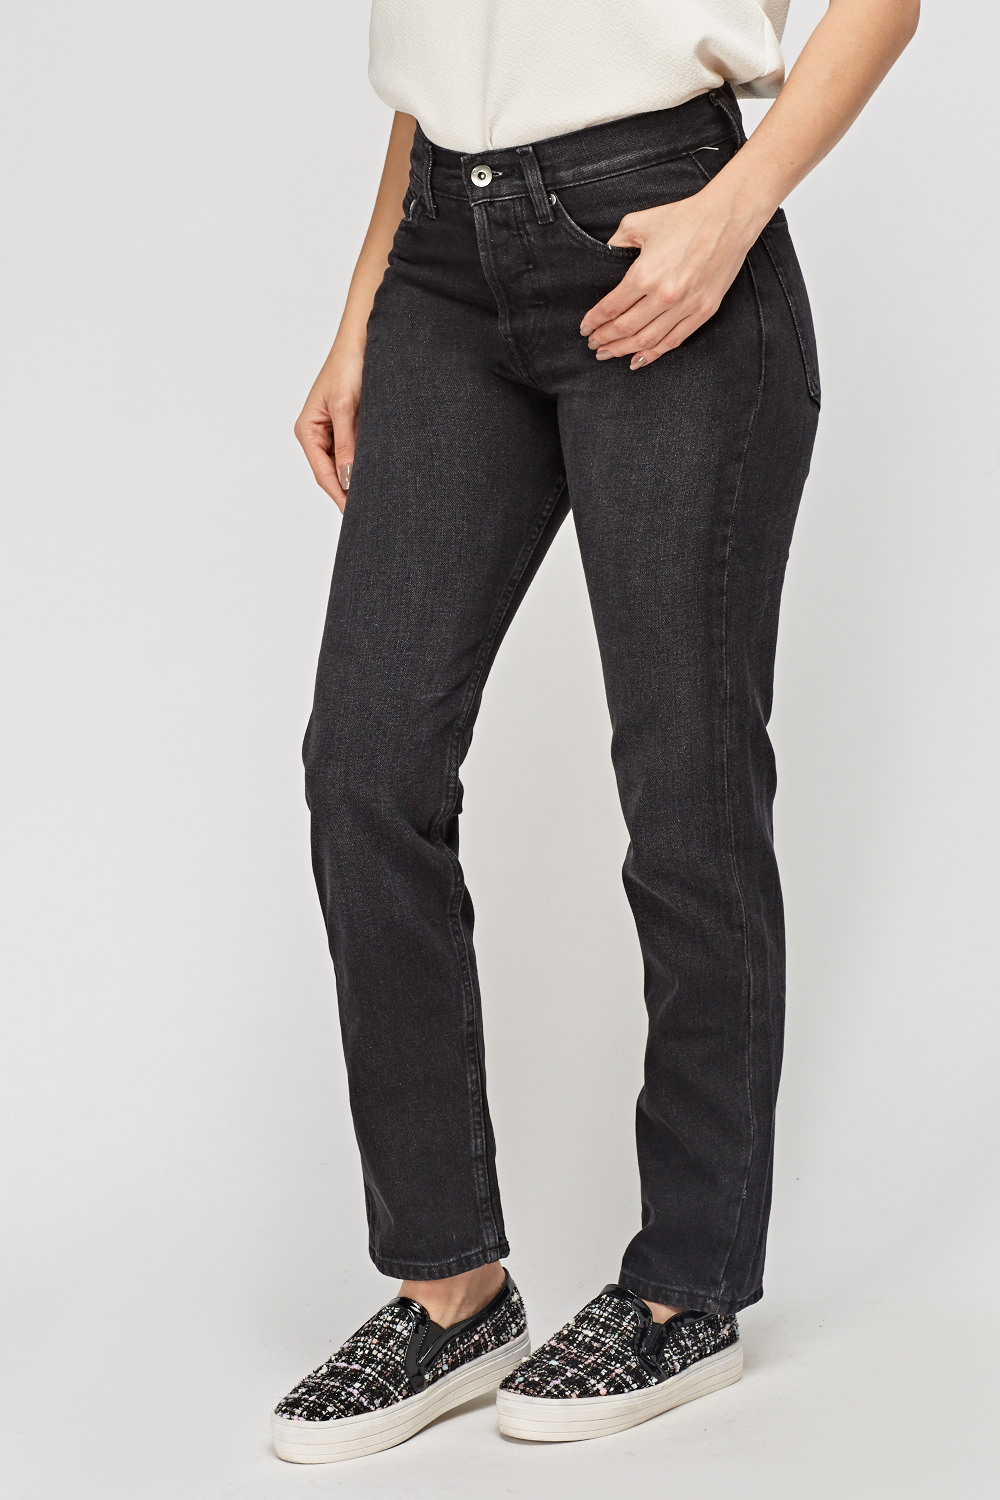 Slim Tapered Black Jeans - Just $3